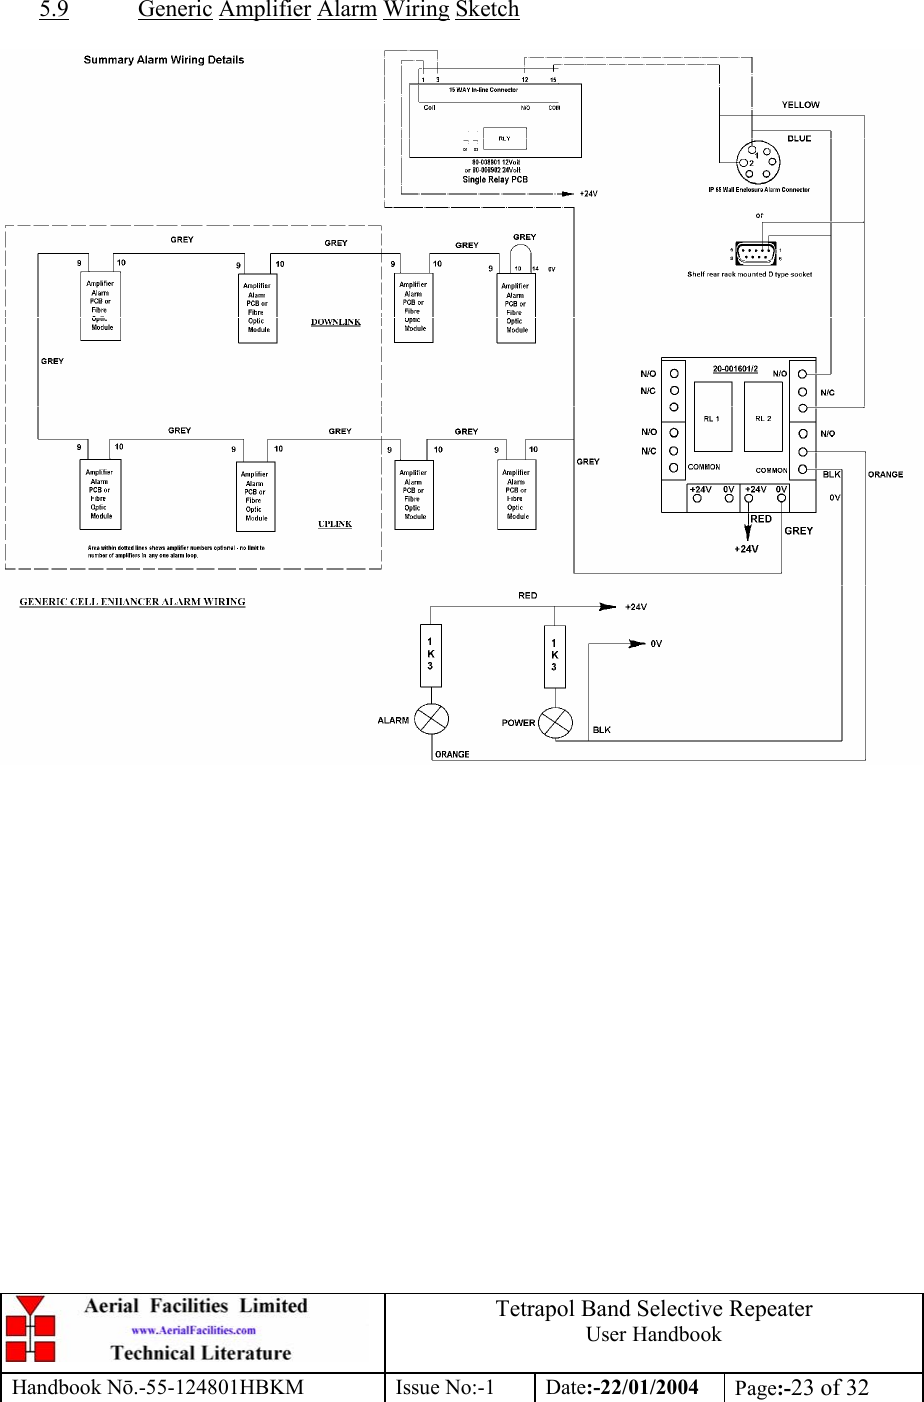  Tetrapol Band Selective Repeater User Handbook Handbook Nō.-55-124801HBKM Issue No:-1 Date:-22/01/2004  Page:-23 of 32   5.9 Generic Amplifier Alarm Wiring Sketch    